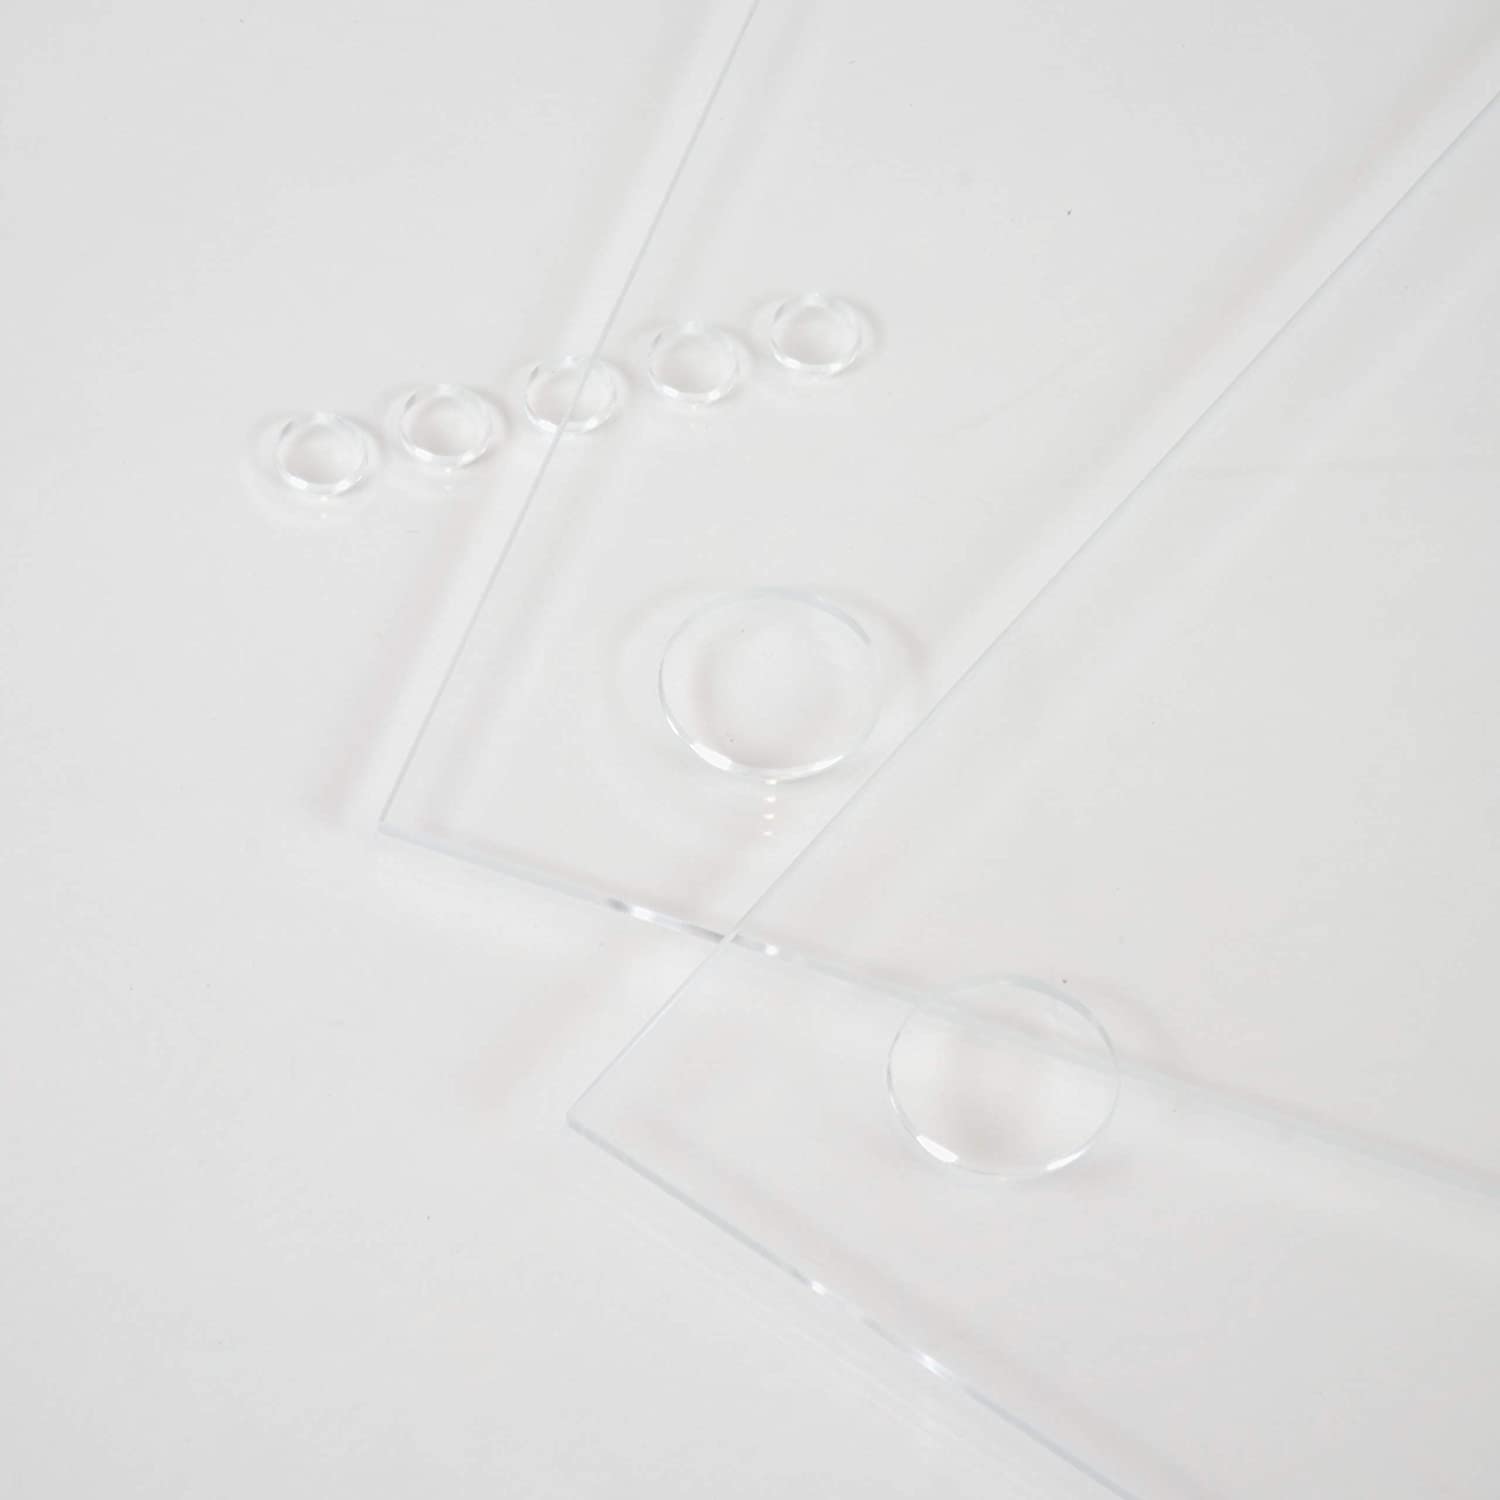 Prusa IKEA Lack V2 Plexiglass Pack (3mm) for 3D Printer Enclosure